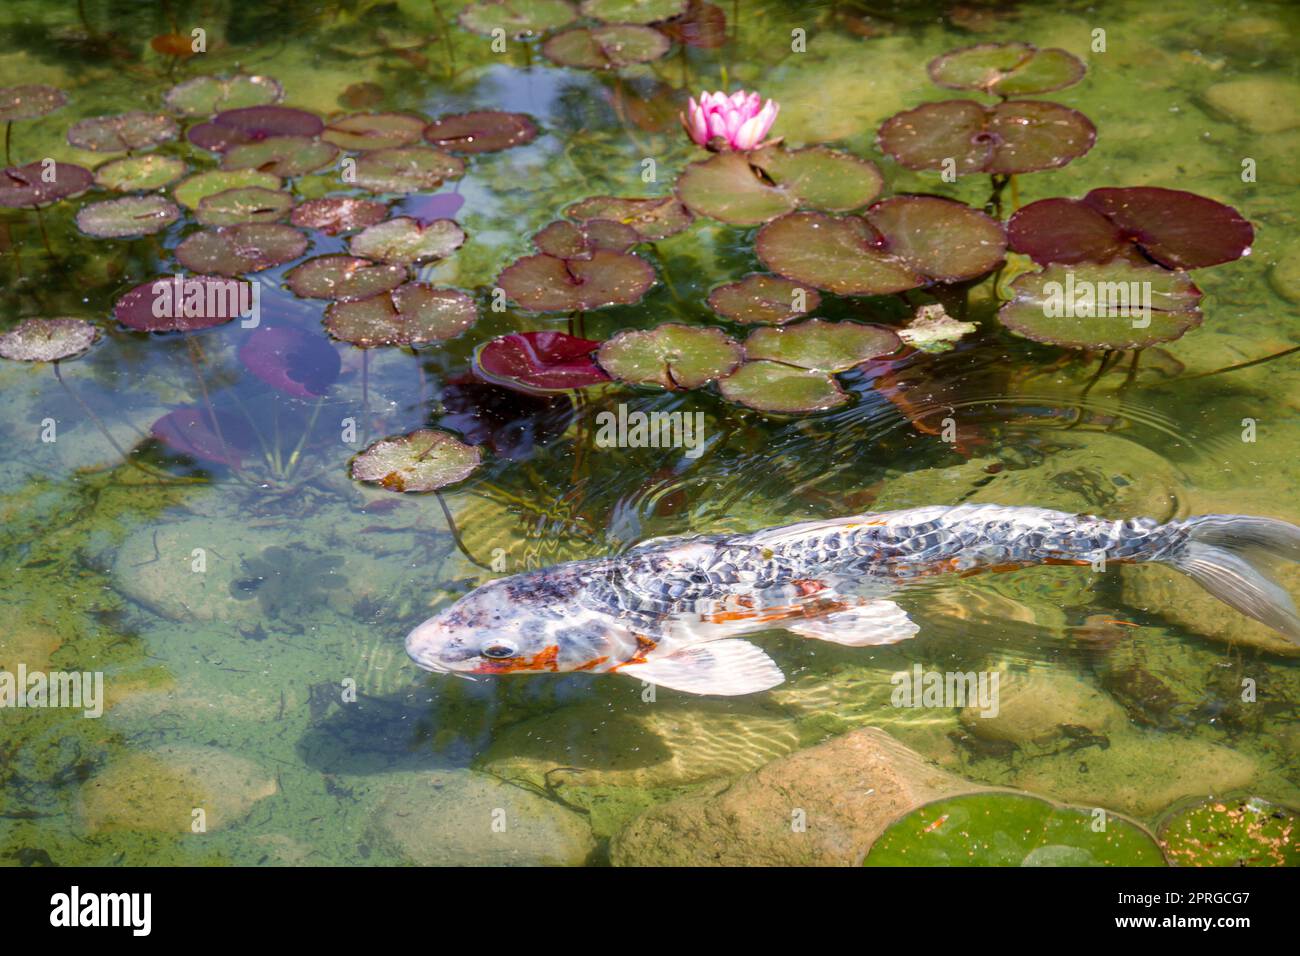 Koi carp in a japanese garden pond Stock Photo